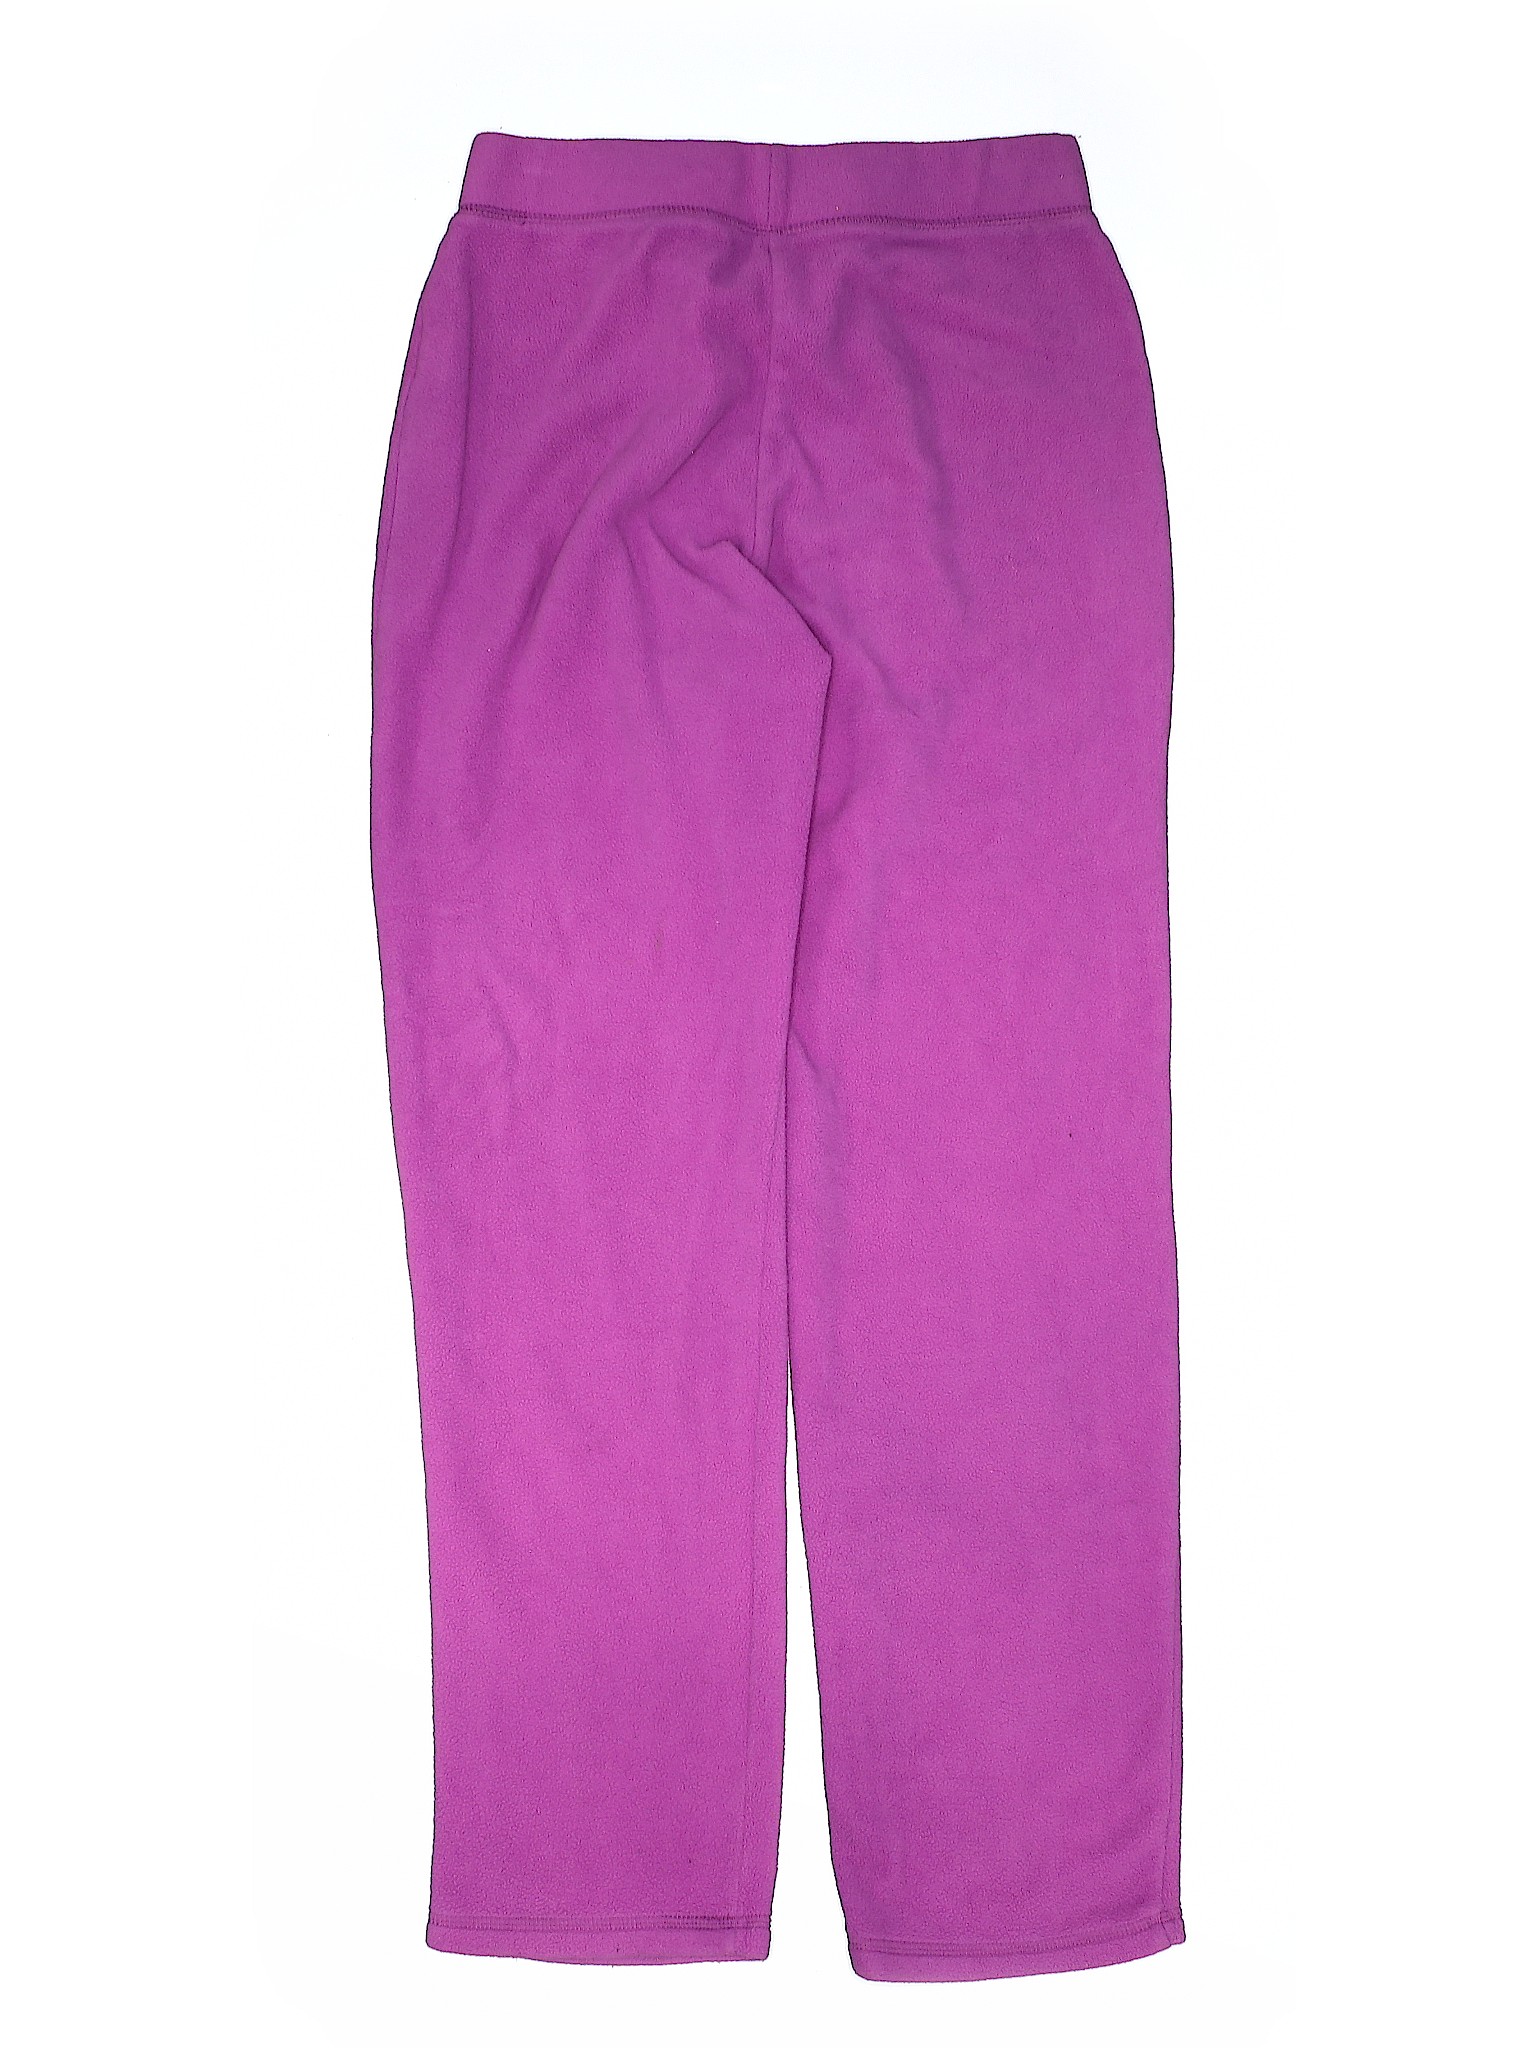 The Children's Place Girls Purple Sweatpants 16 | eBay